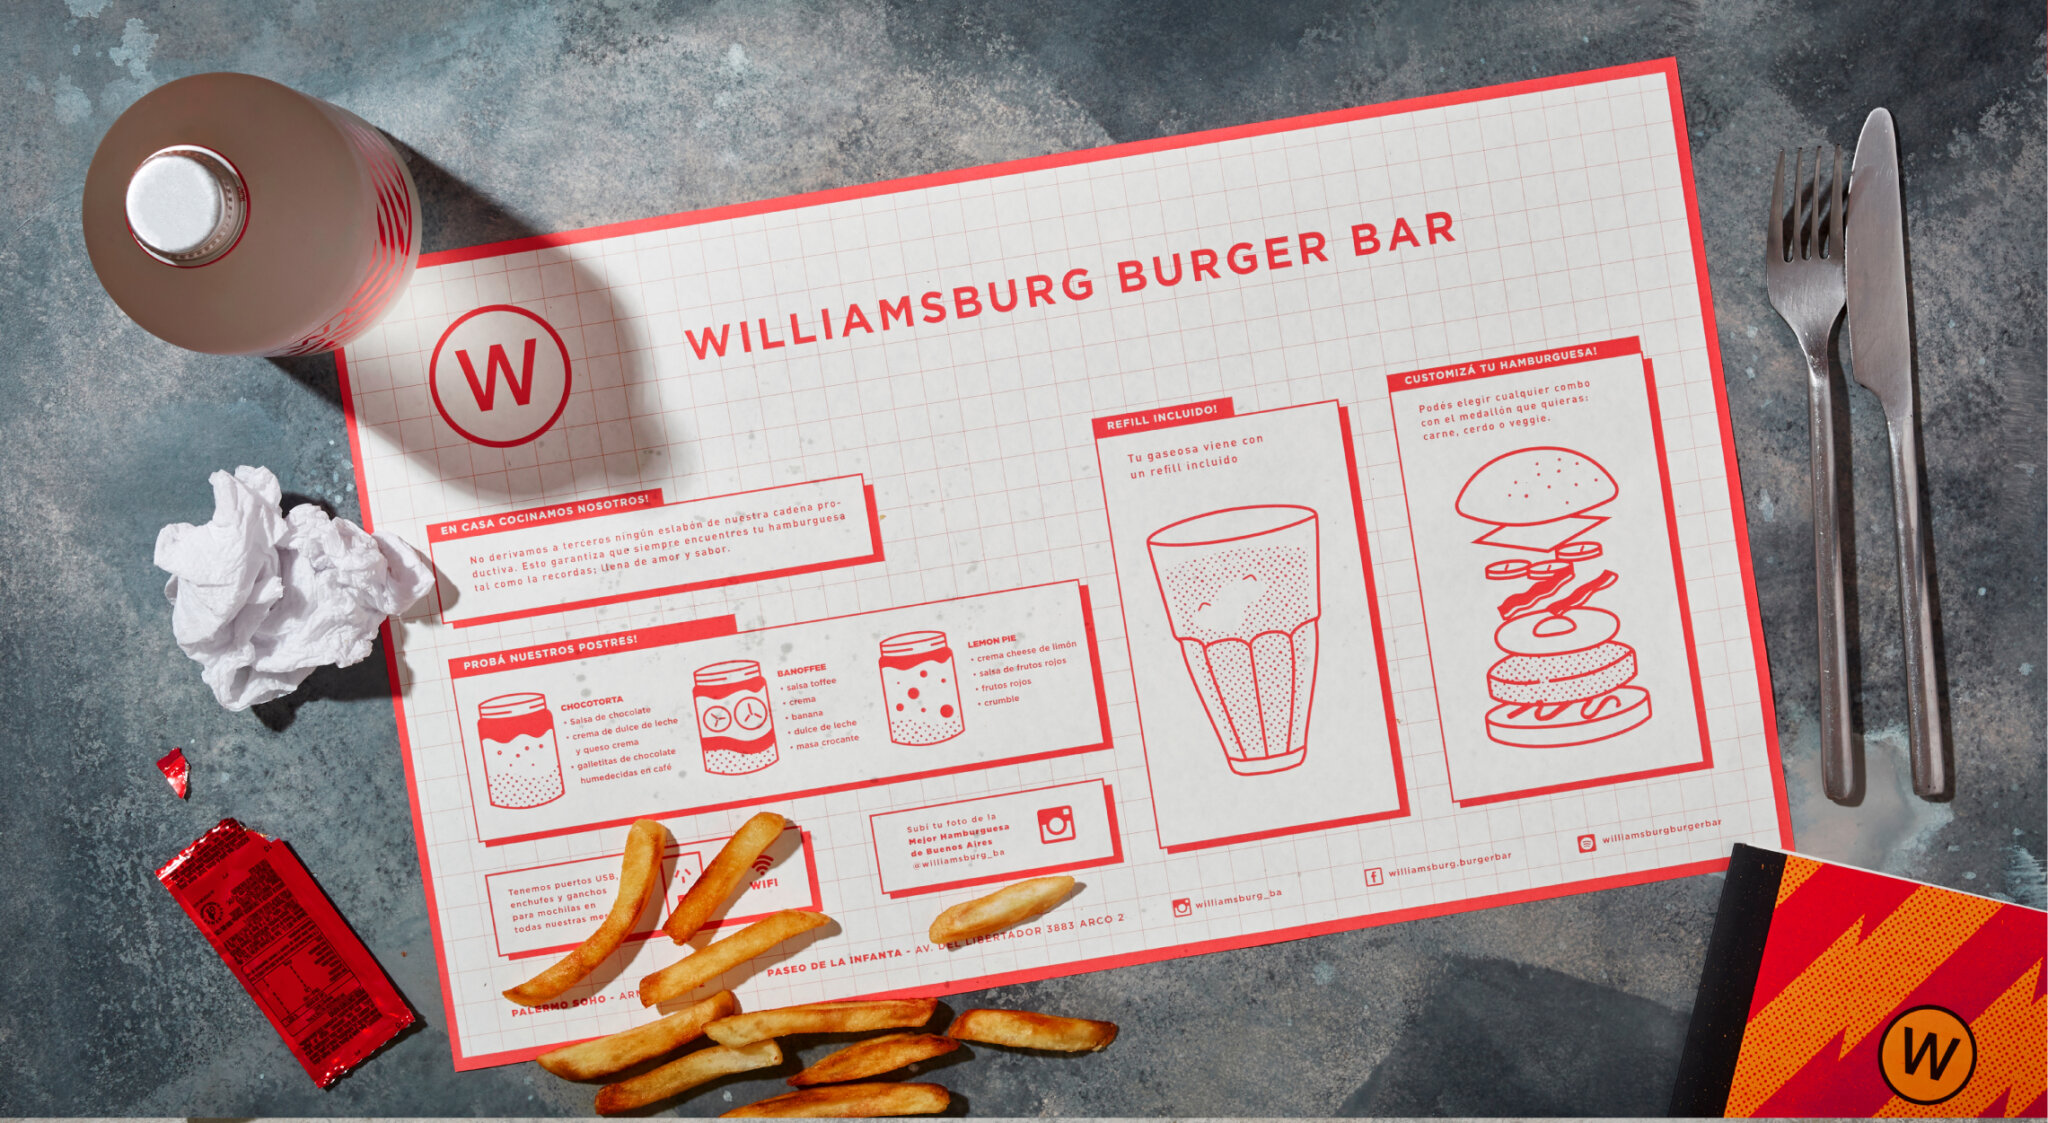 Williamsburg Burger Bar restaurant branding by Charco Studio in Argentina